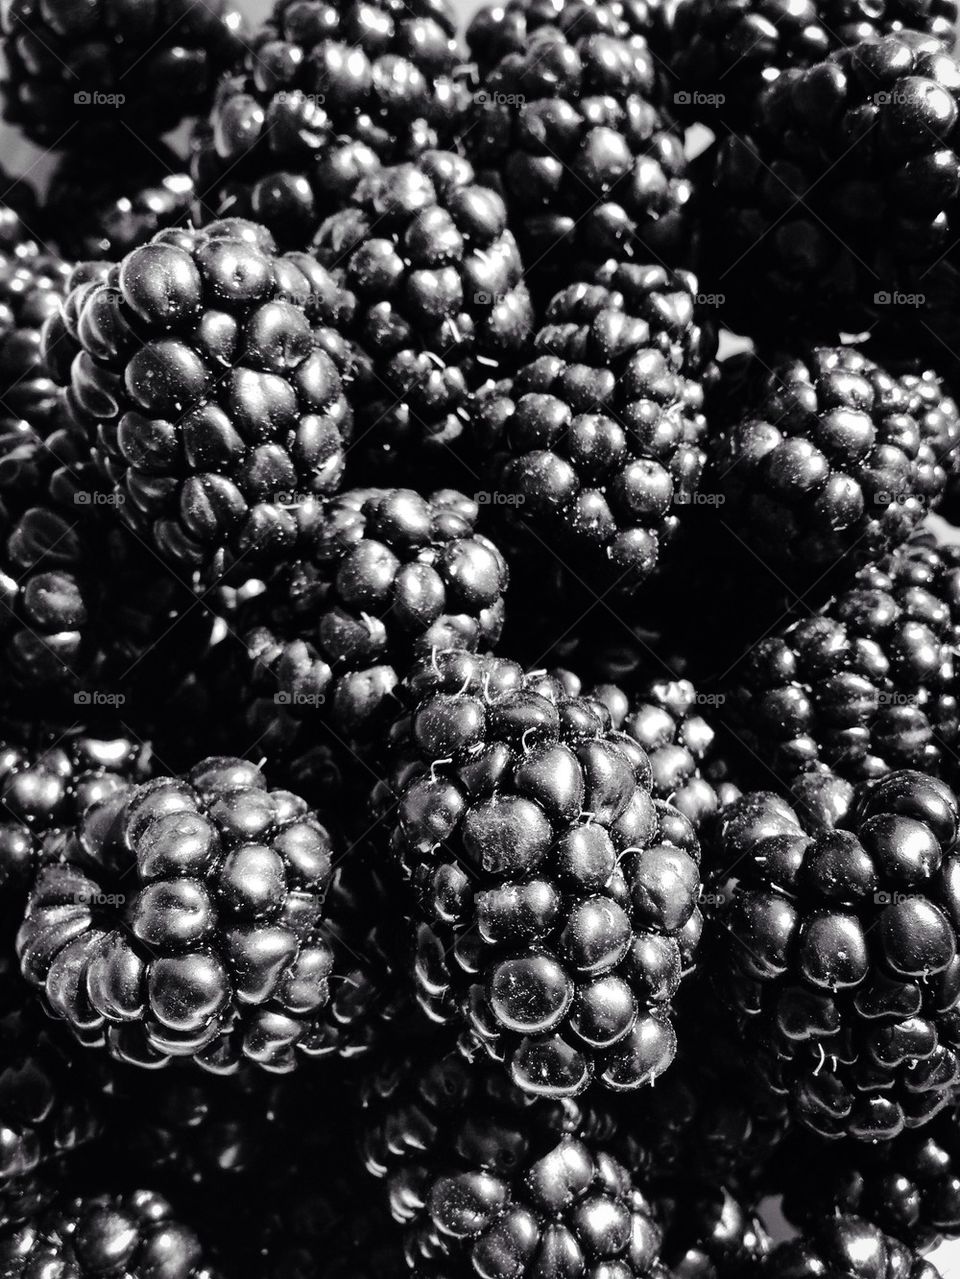 BlackBerries